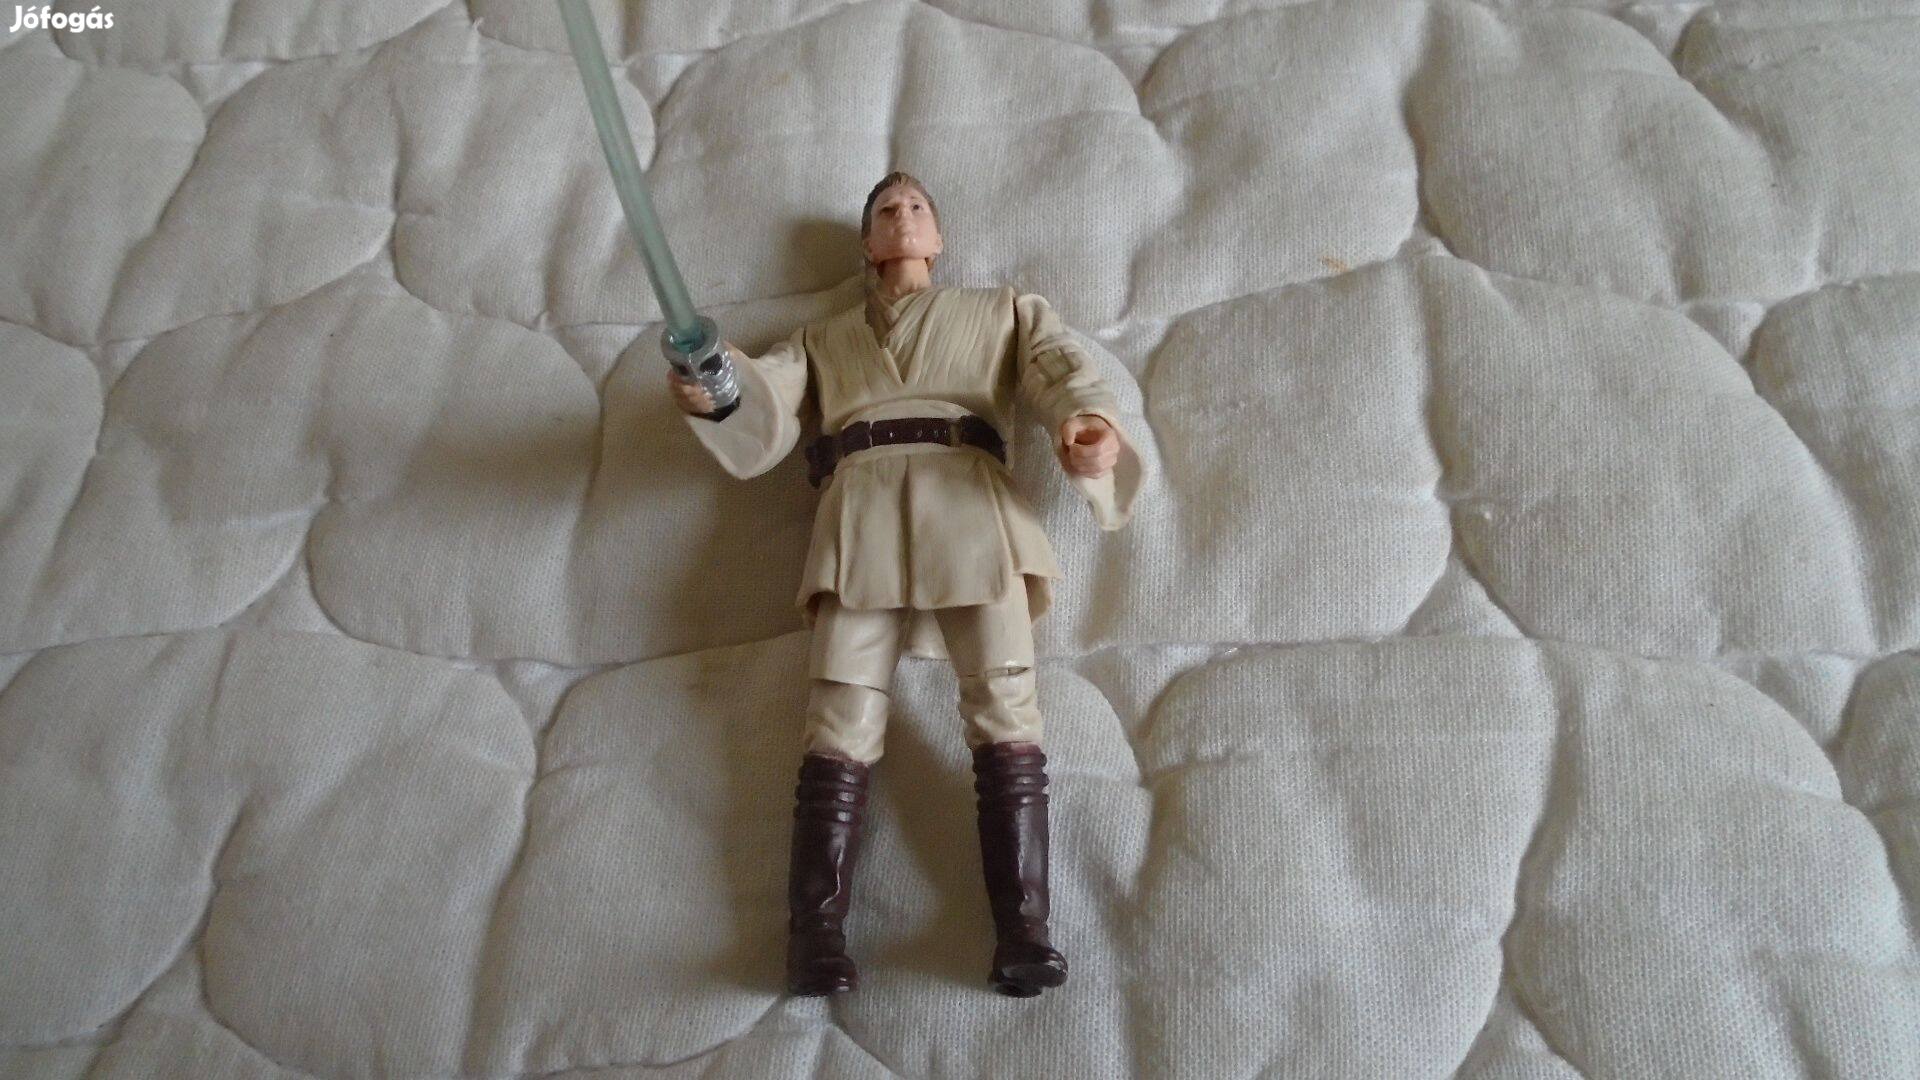 Star Wars figurák - eredetiek - kb. 10 cm magasak - jó állapotúak